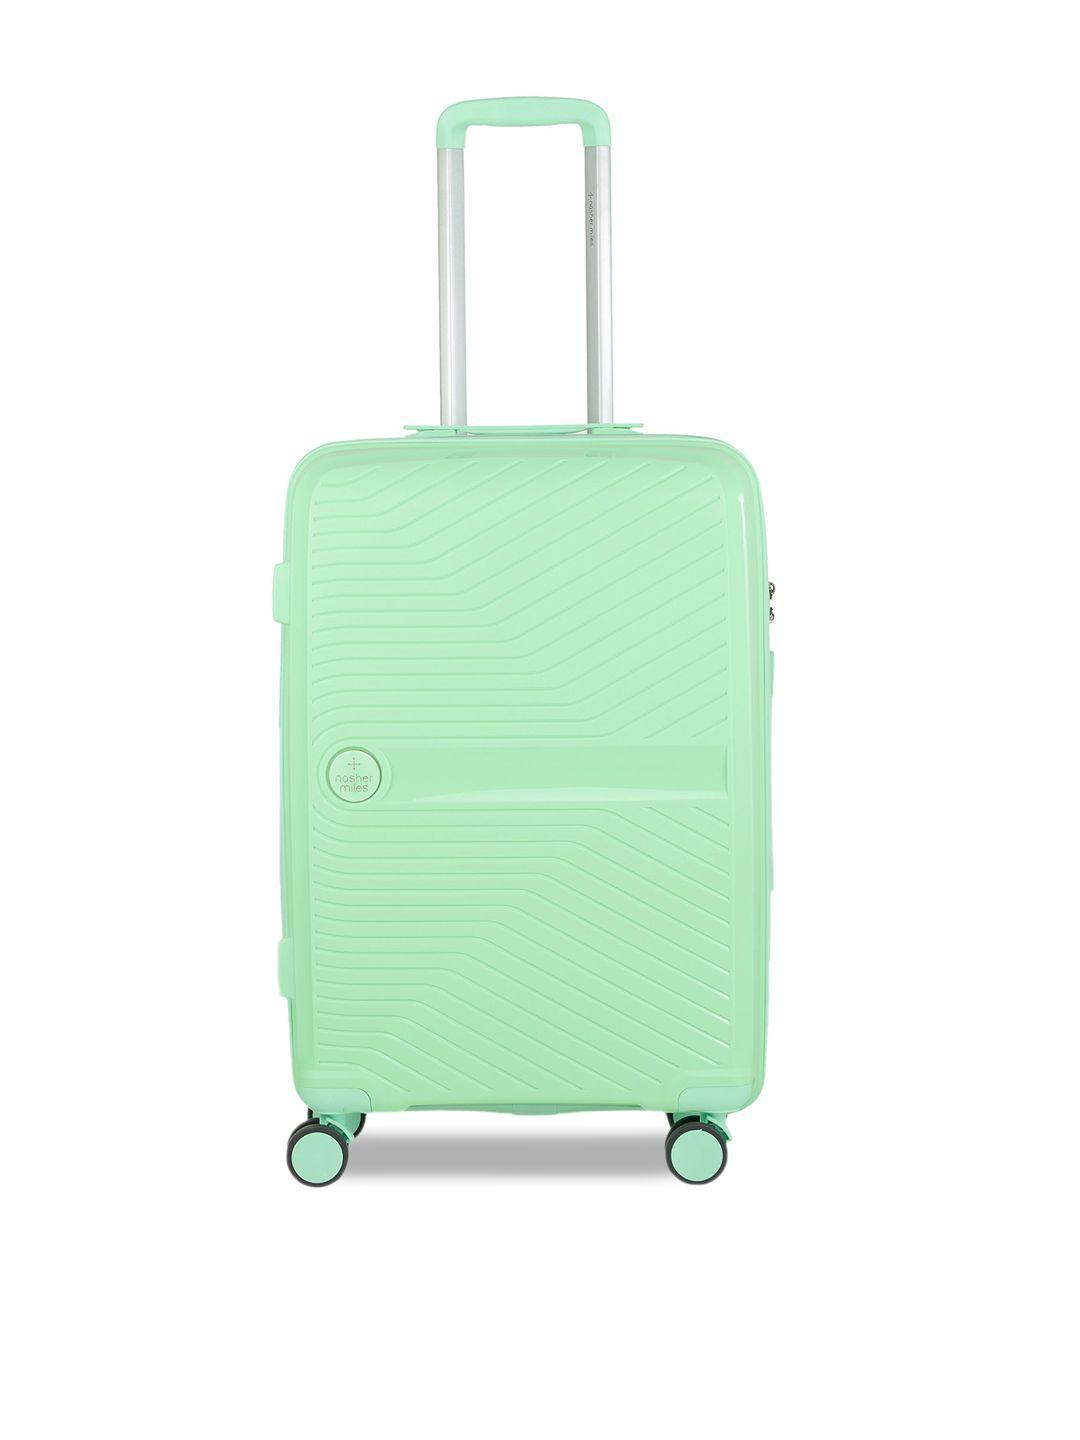 nasher miles bruges hard-sided medium trolley suitcase